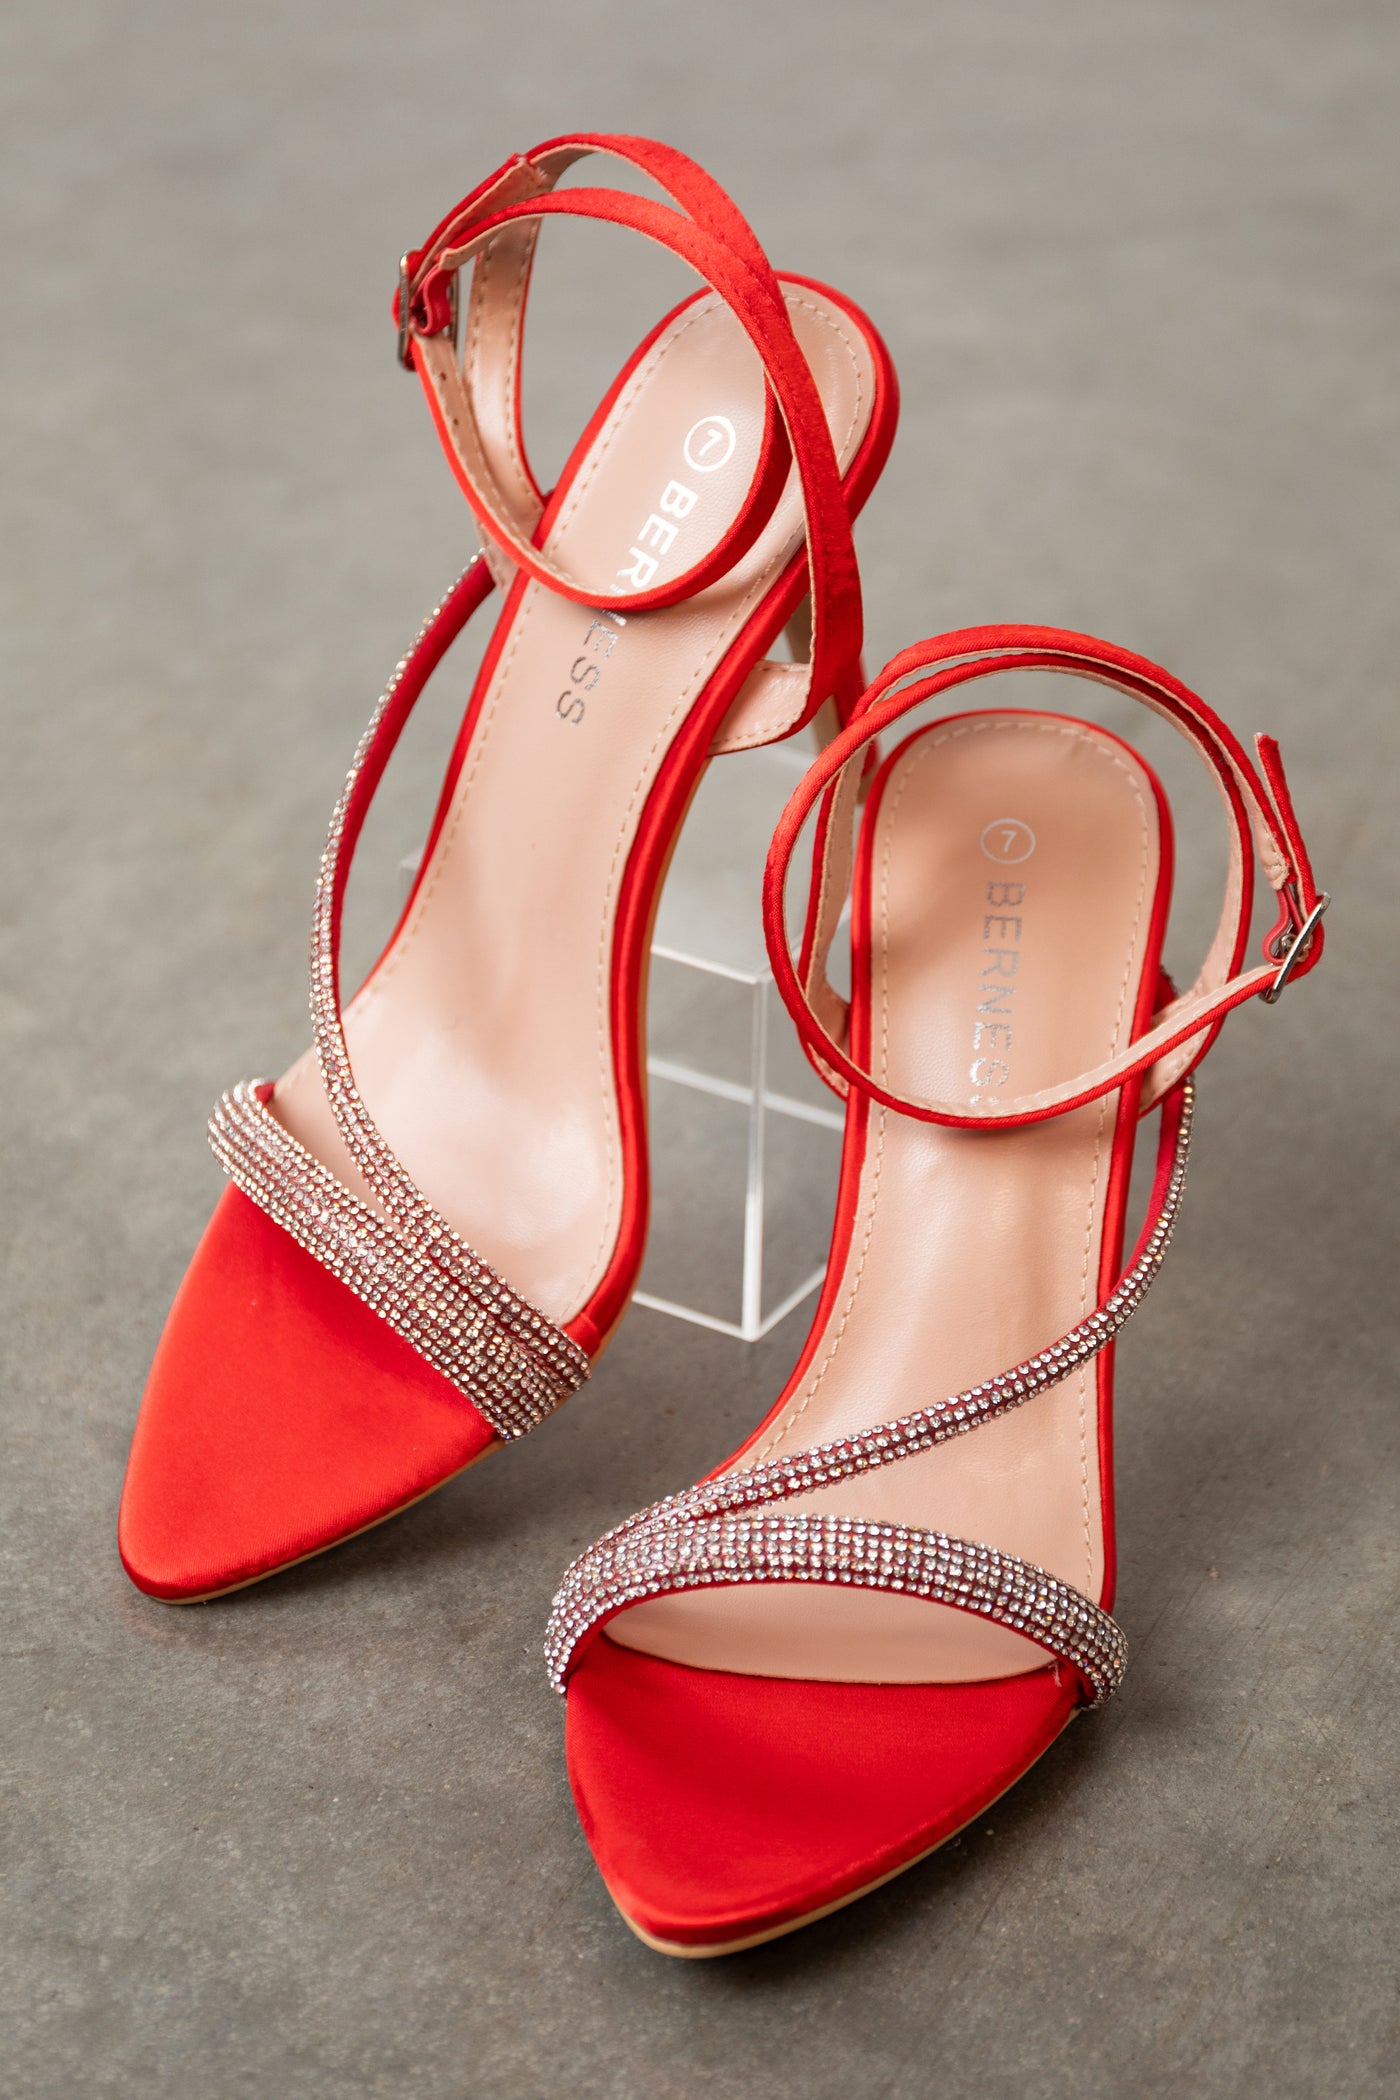 Scarlet Satin Heeled Sandals with Rhinestone Straps